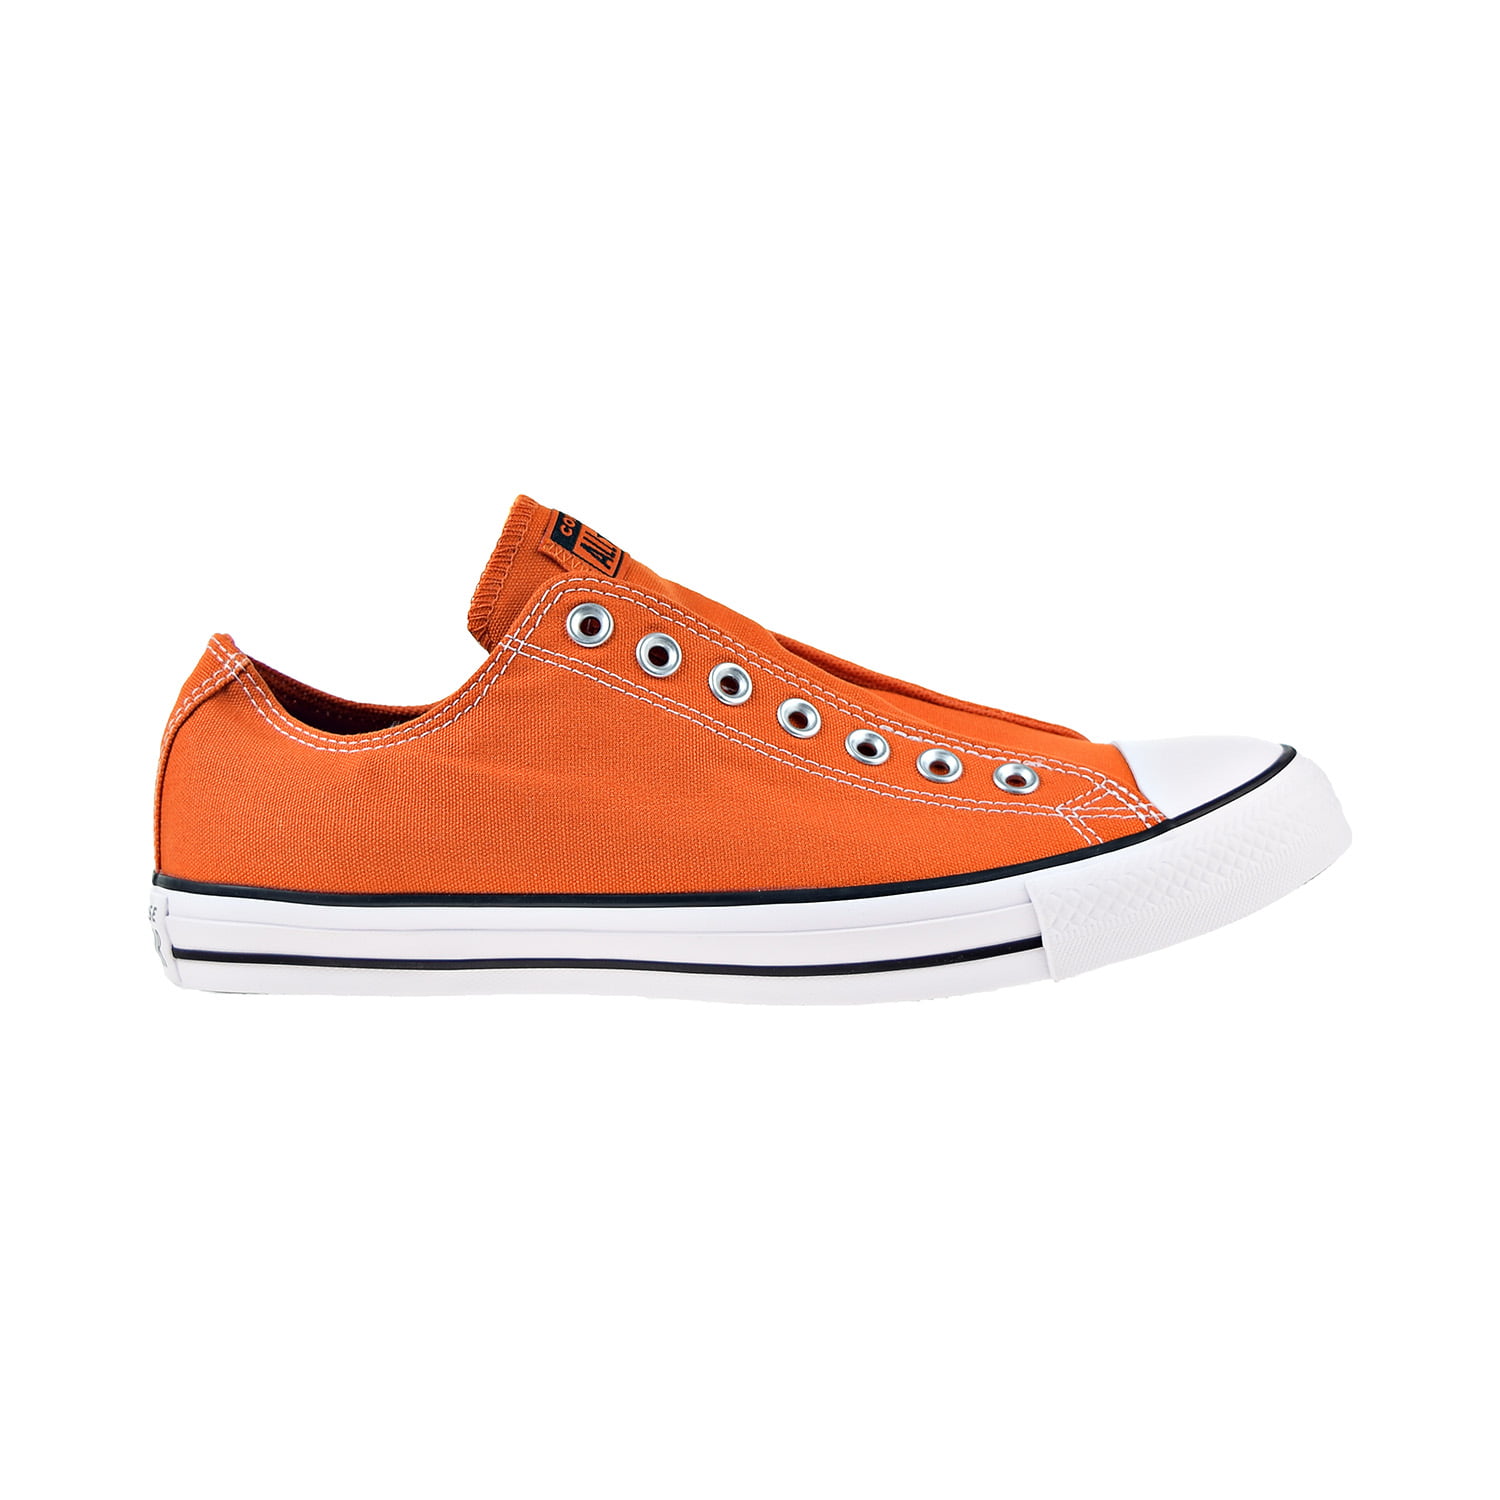 Converse Chuck Taylor All Star Slip On Men's Shoes Campfire Orange-White-Black  166342c 